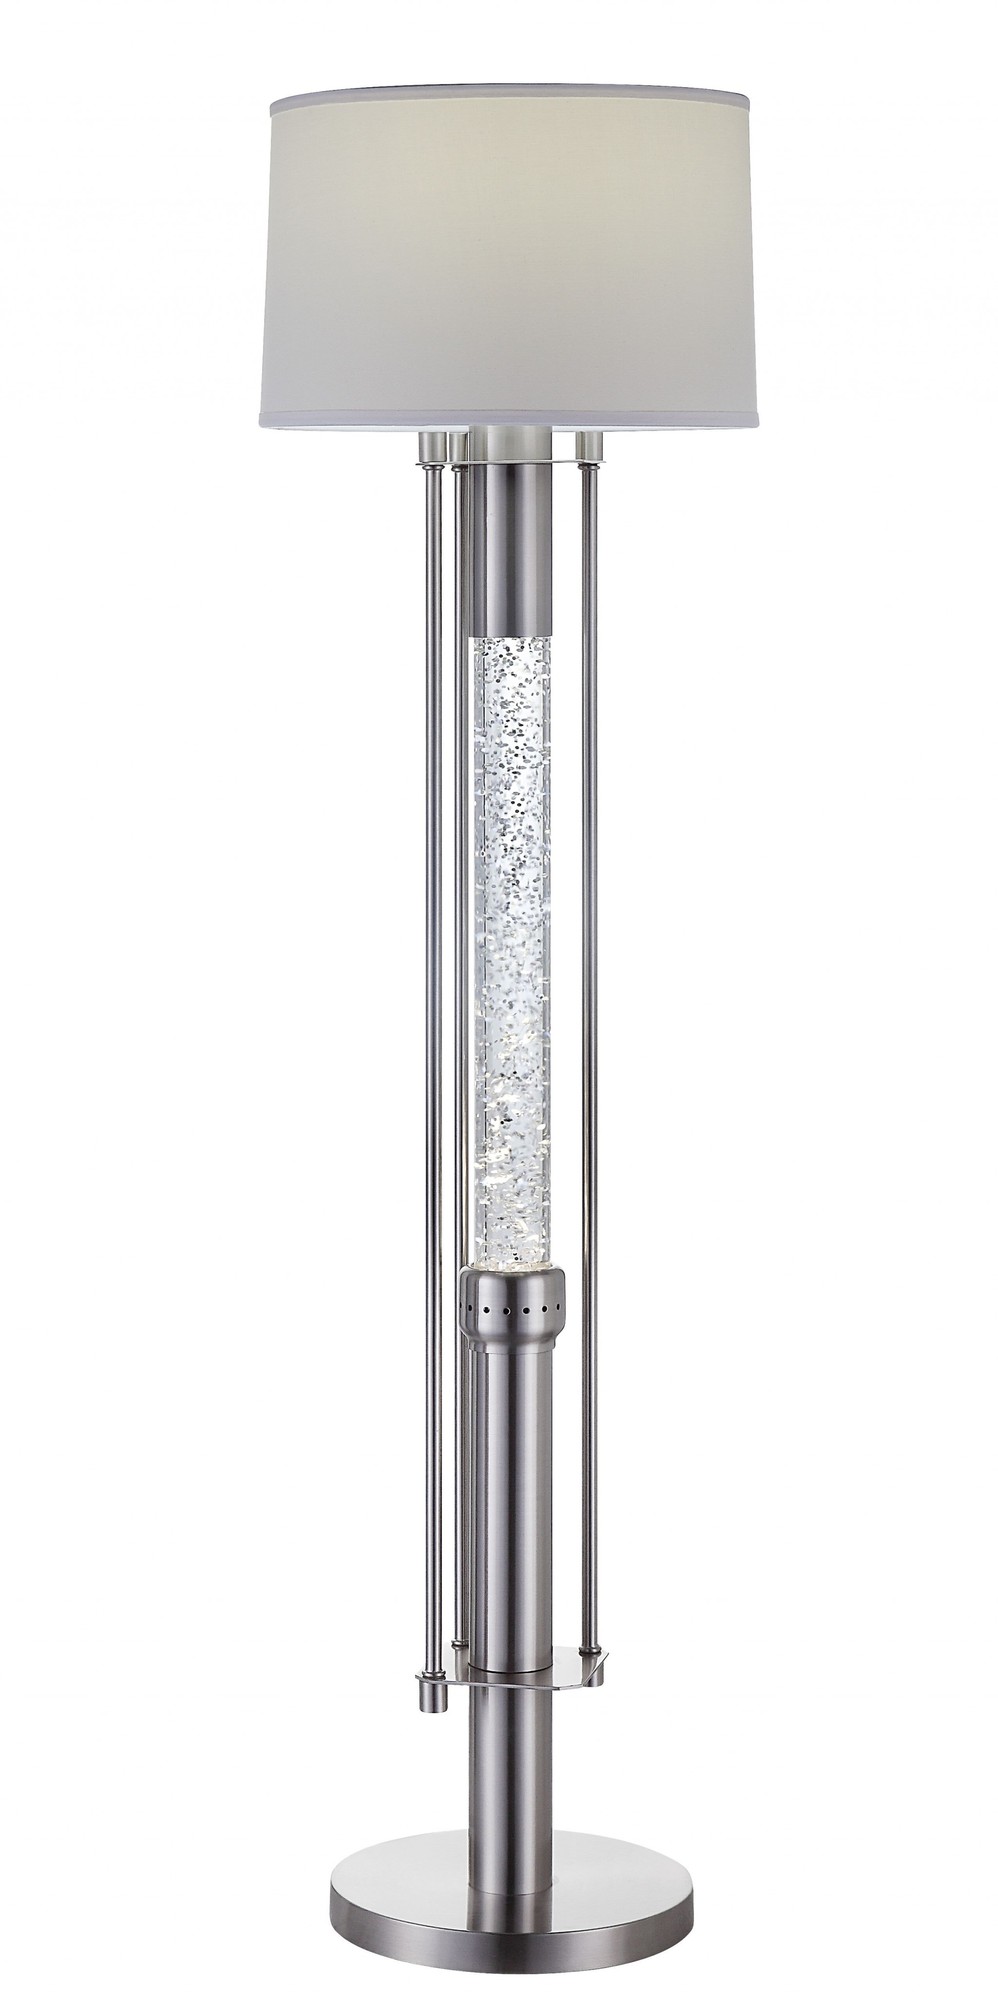 15" X 15" X 58" Brushed Nickel Metal Glass LED Shade Floor Lamp